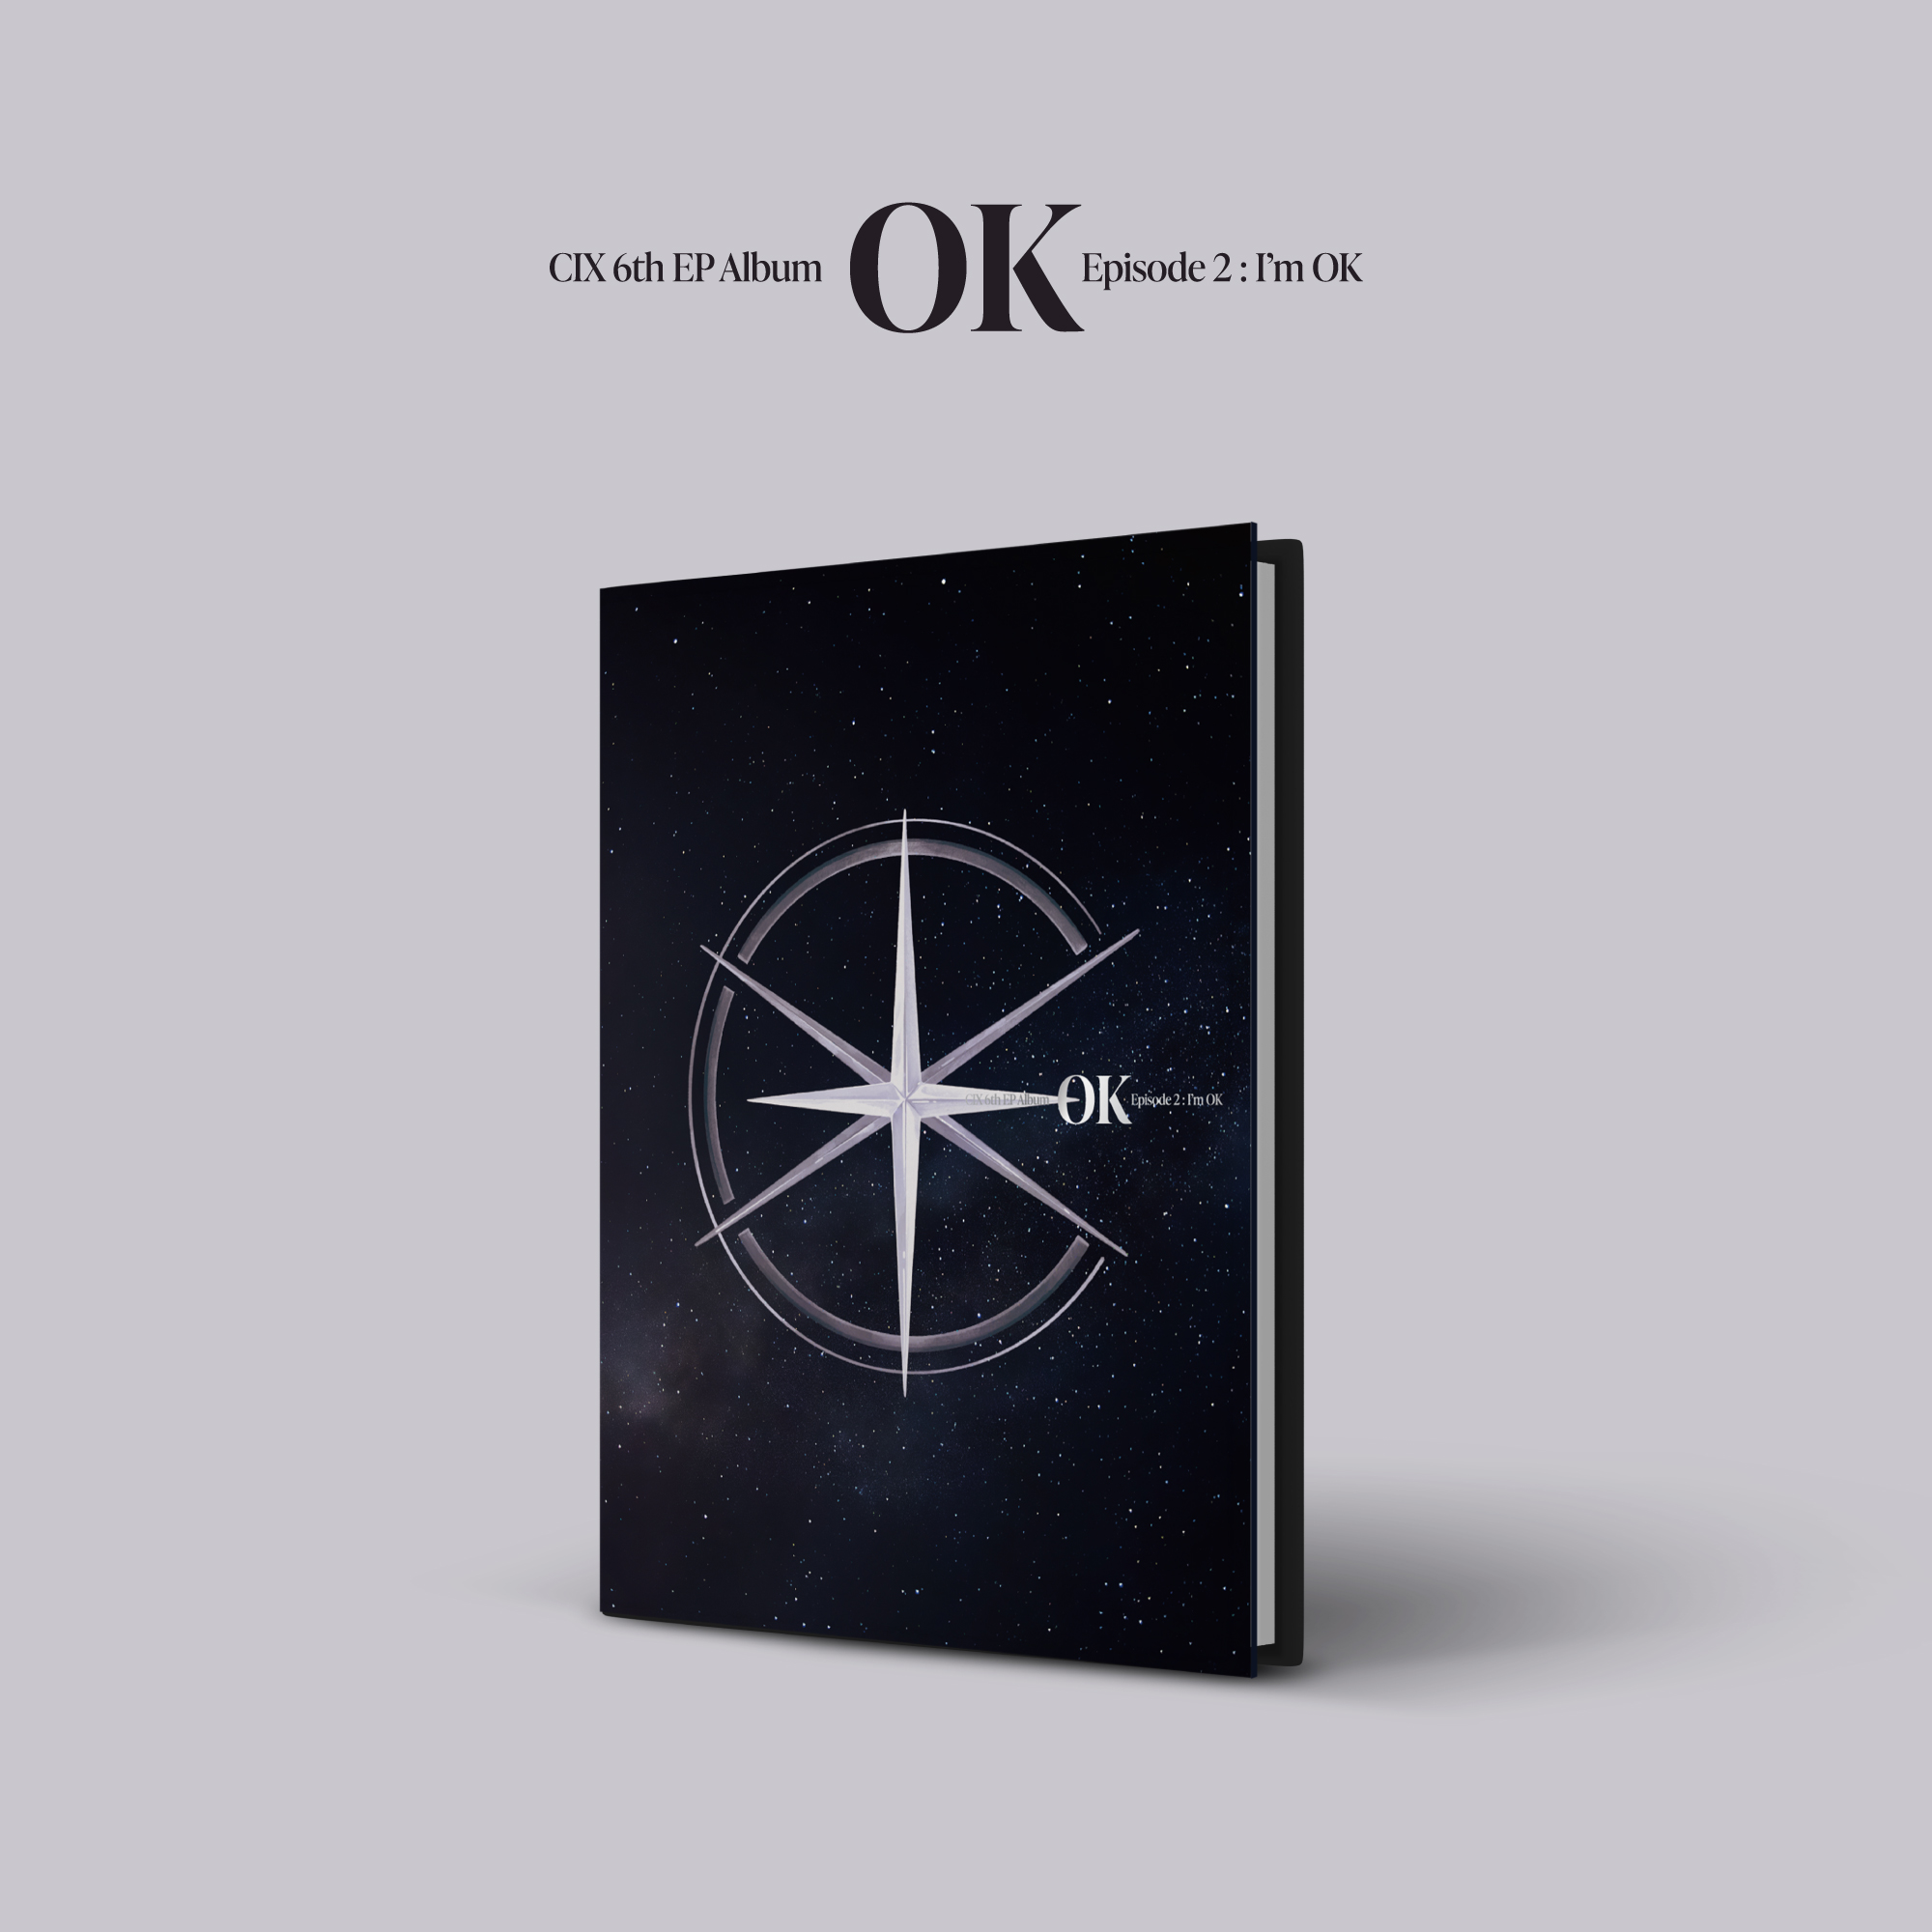 CIX - 6th EP Album ['OK' Episode 2 : I'm OK] (Kill me ver.)